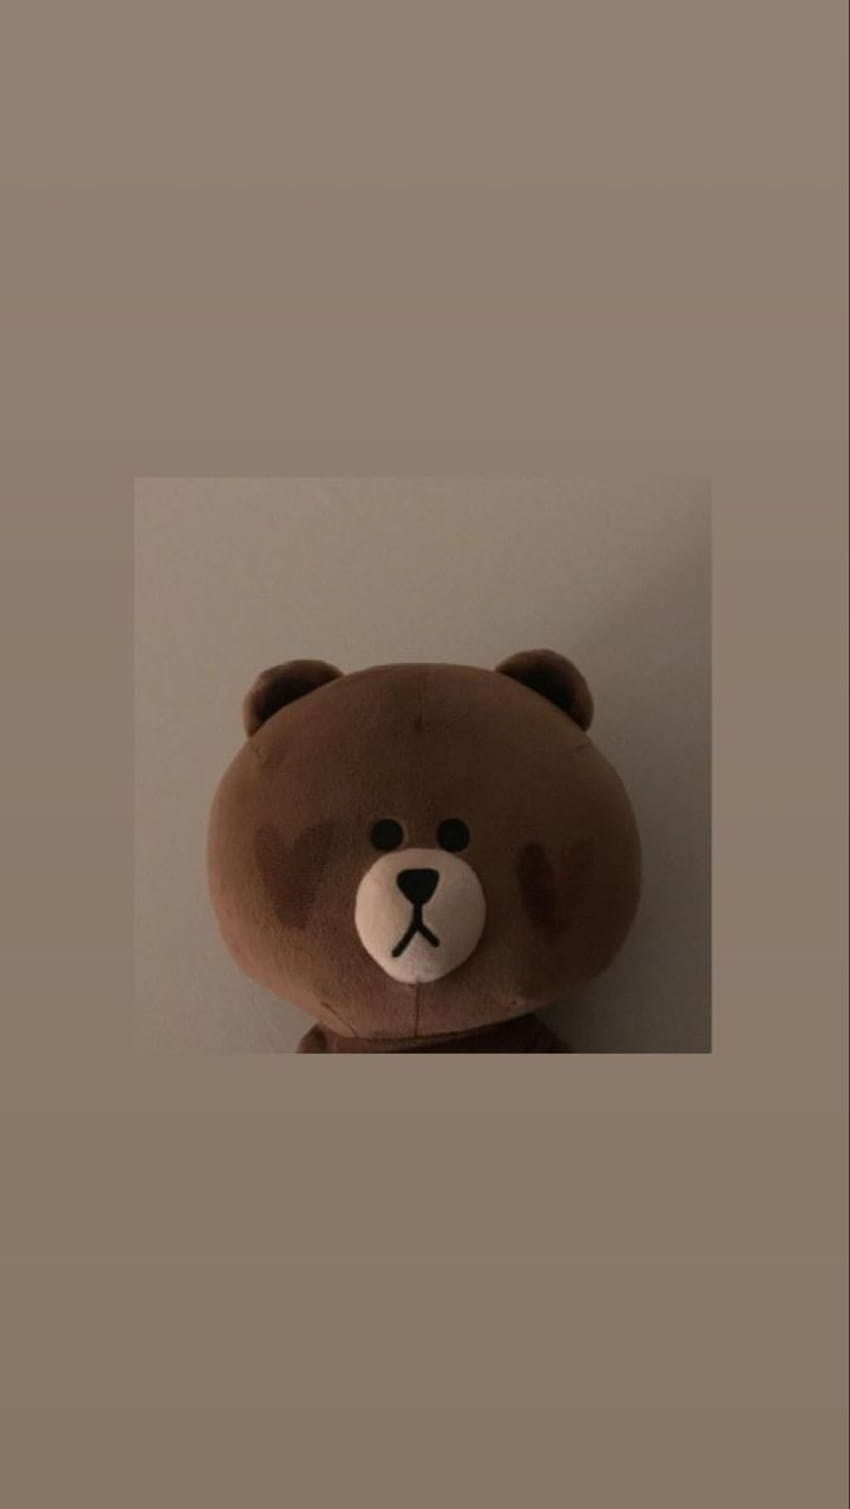 Cute Bear Wallpaper Images  Free Download on Freepik